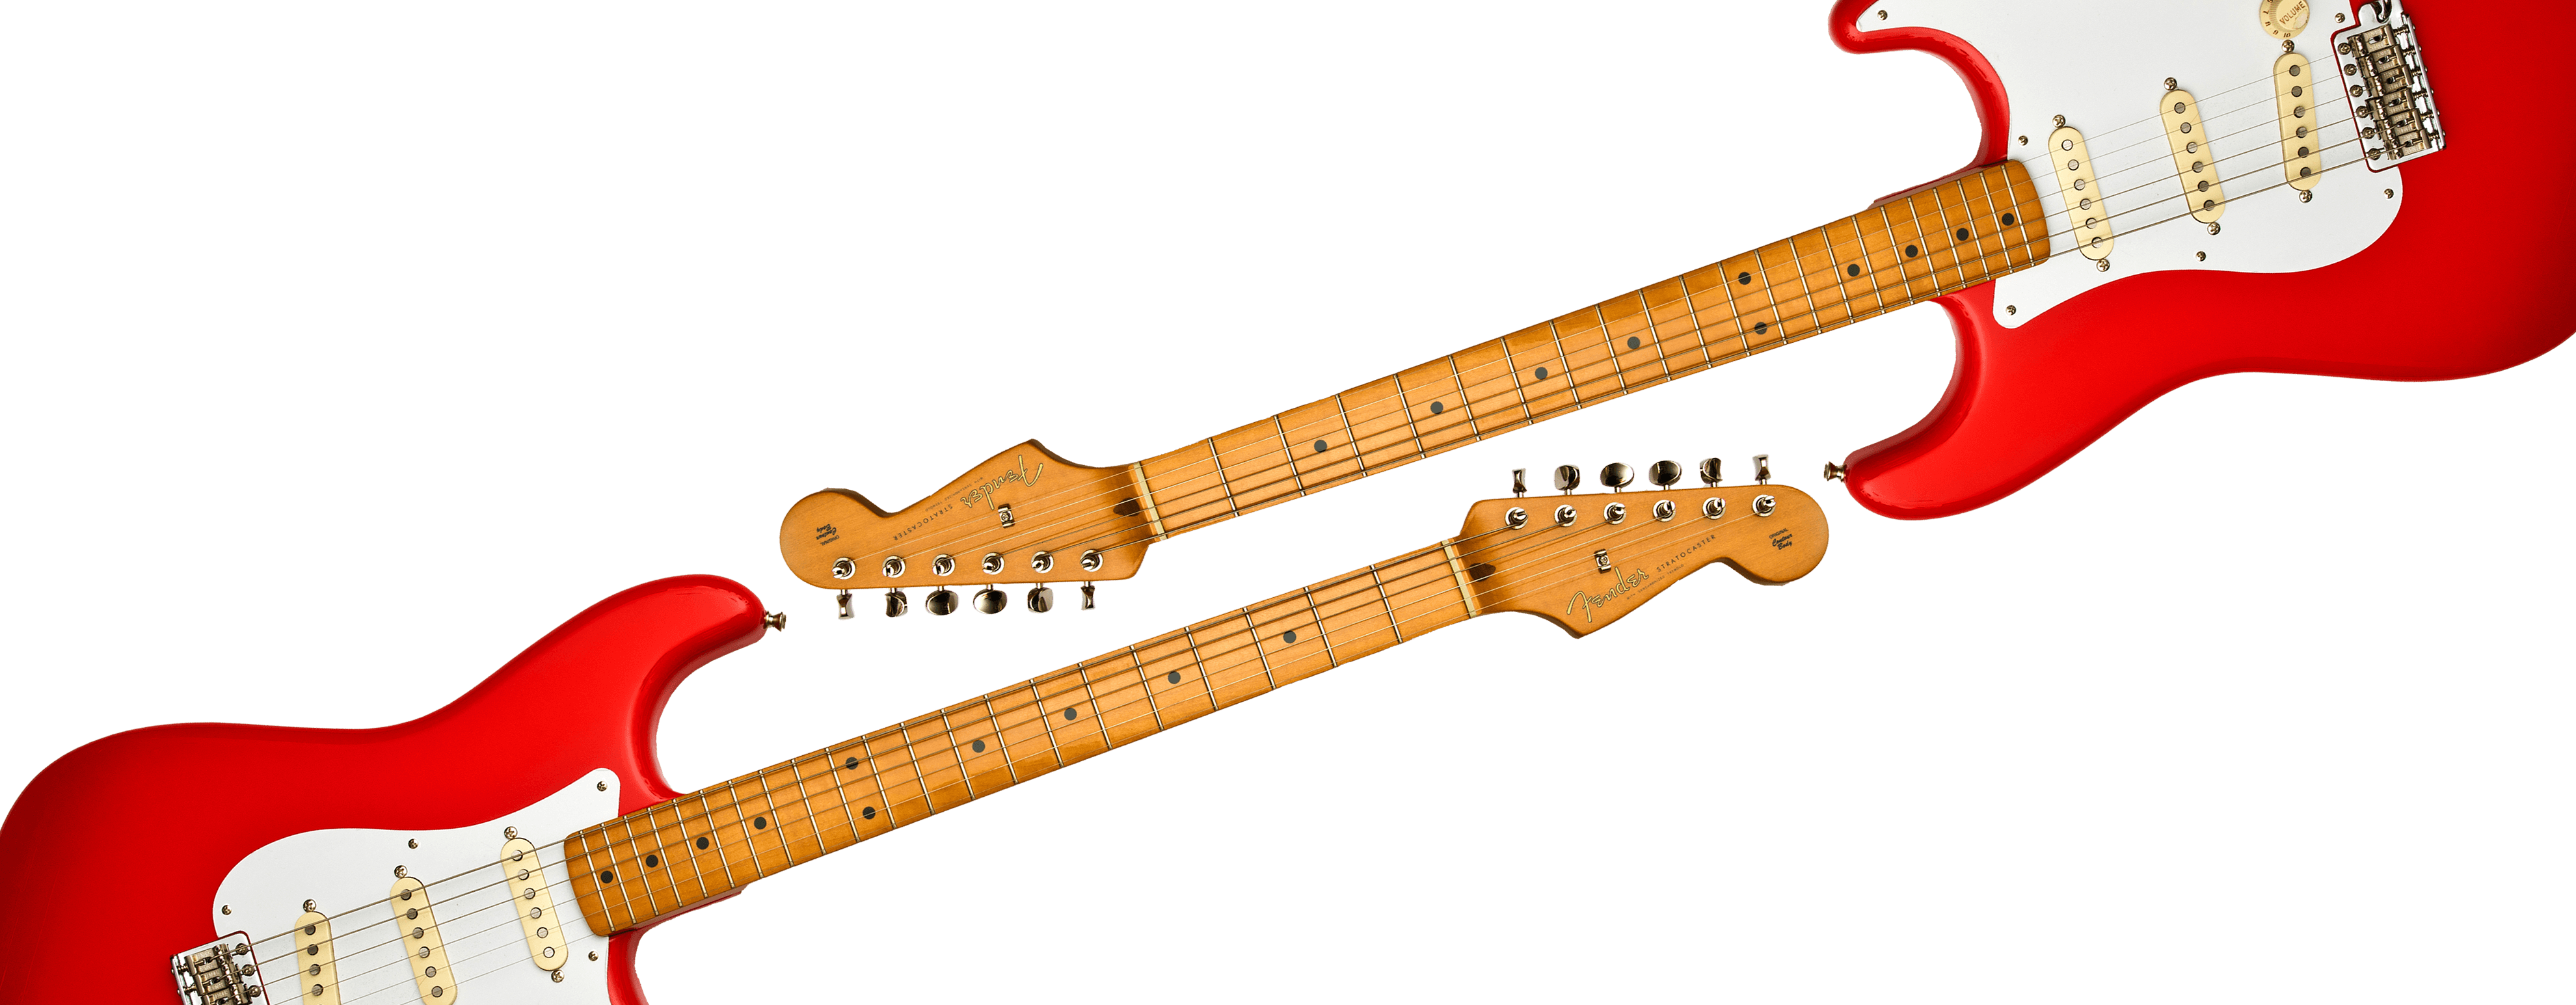 Instant Guitar Series Electric Guitar Bundle